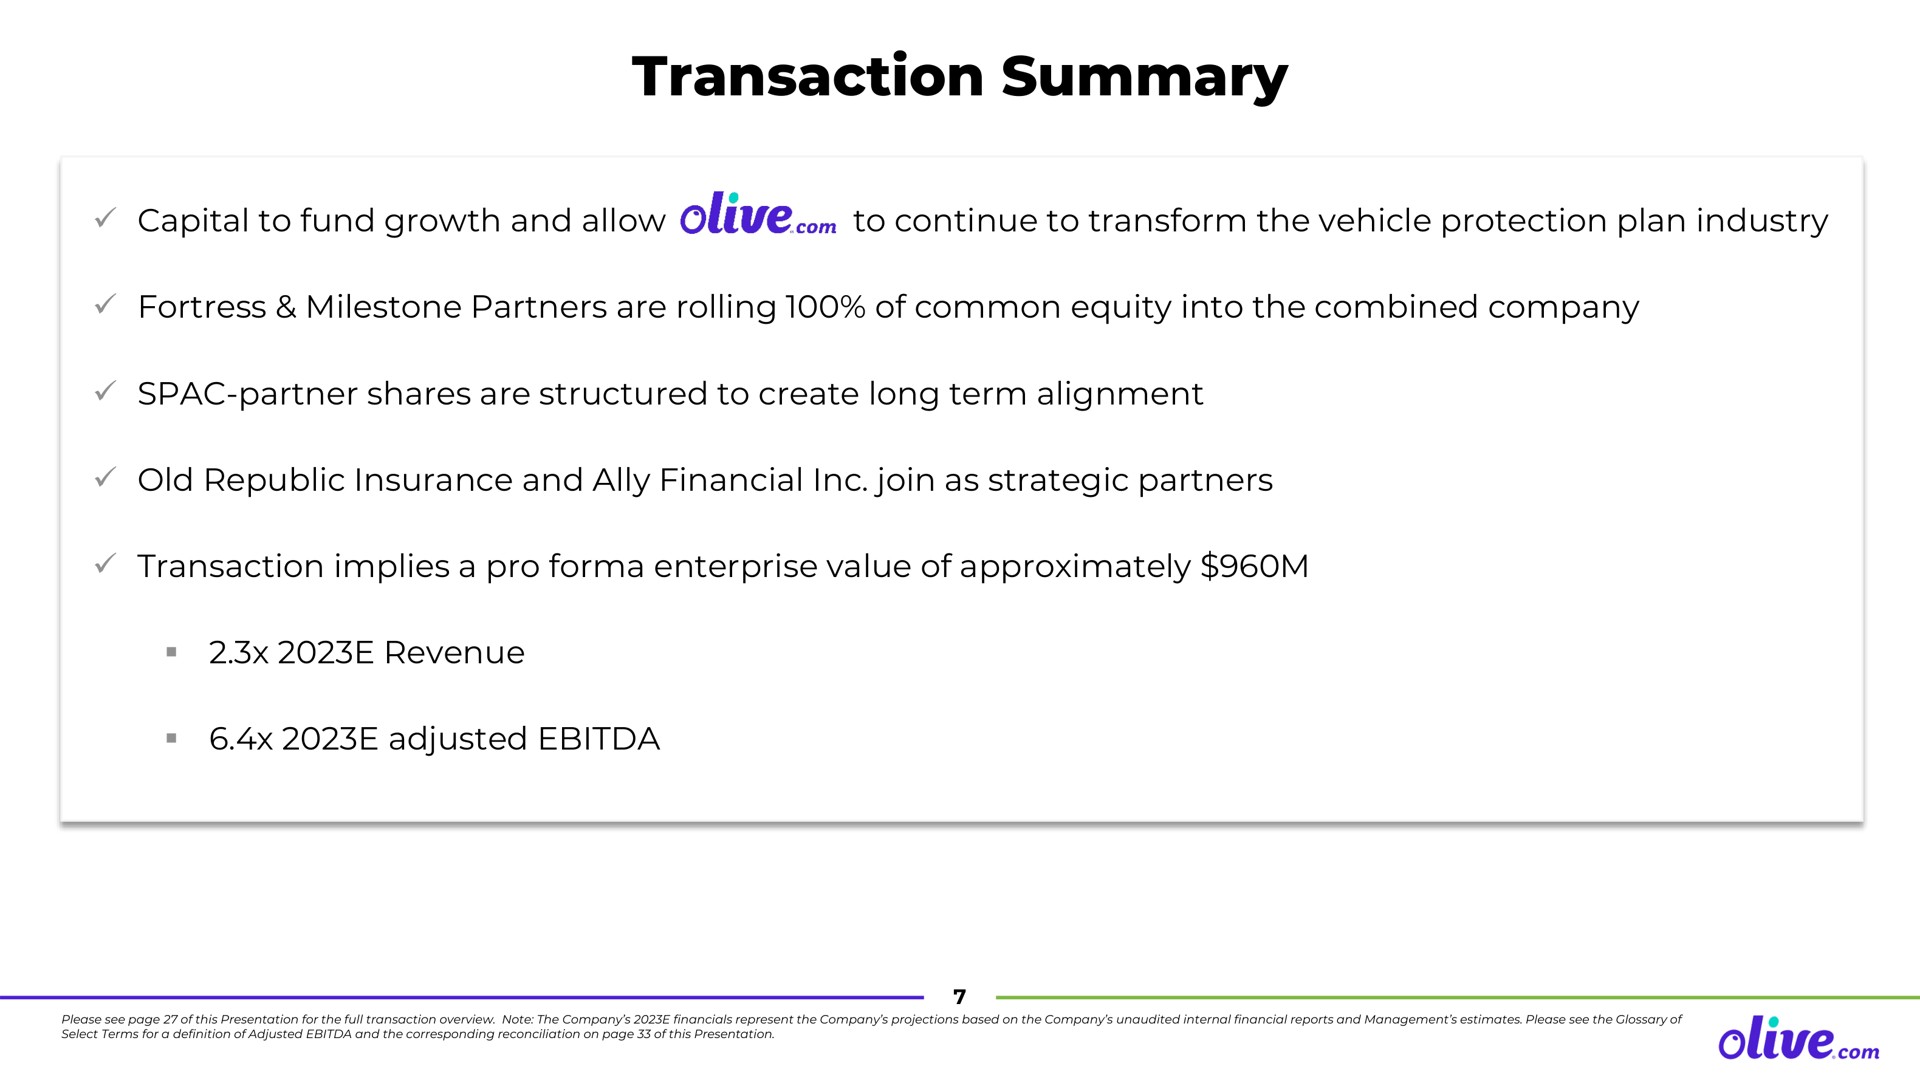 transaction summary | Olive.com